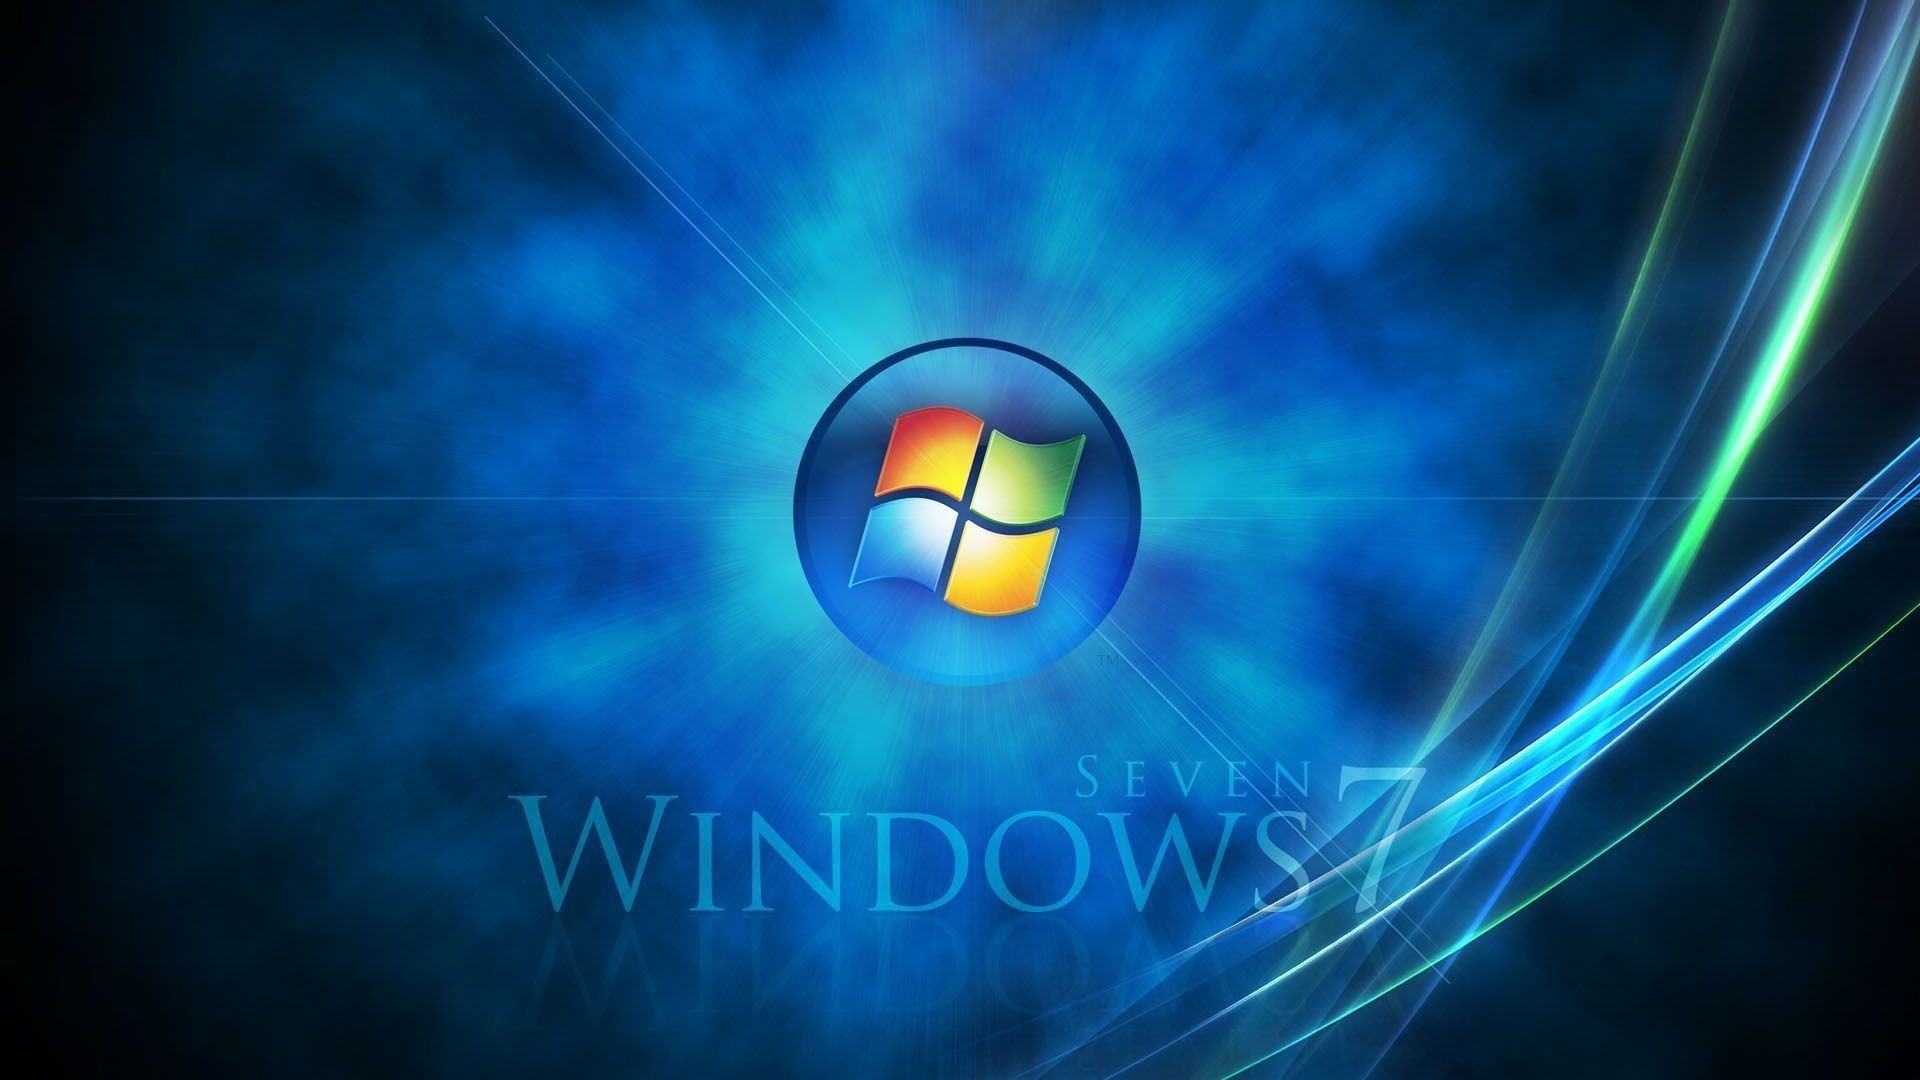 1920x1080 Windows 7 Ultimate Wallpaper Hd wallpaper - 360190